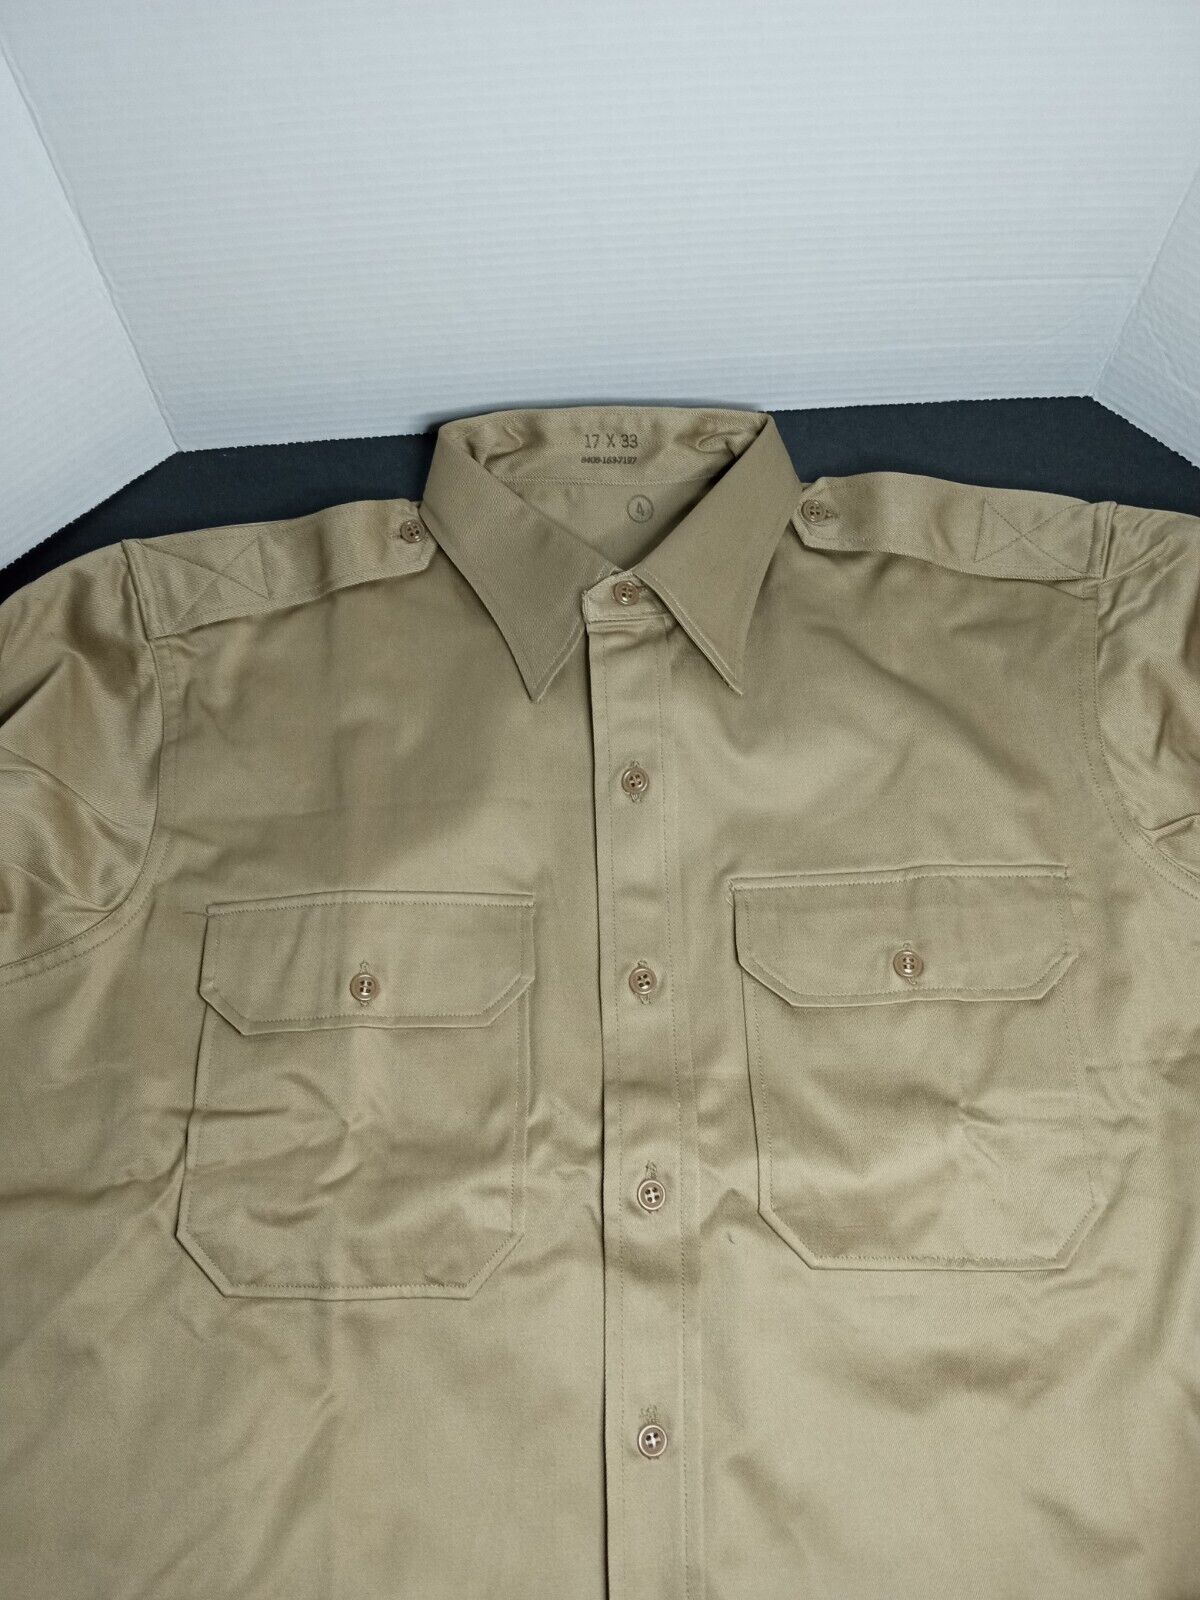 Vietnam era U.S. Army  Khaki Shirt - Size 17 X 33 Brand New Condition Govt Issue